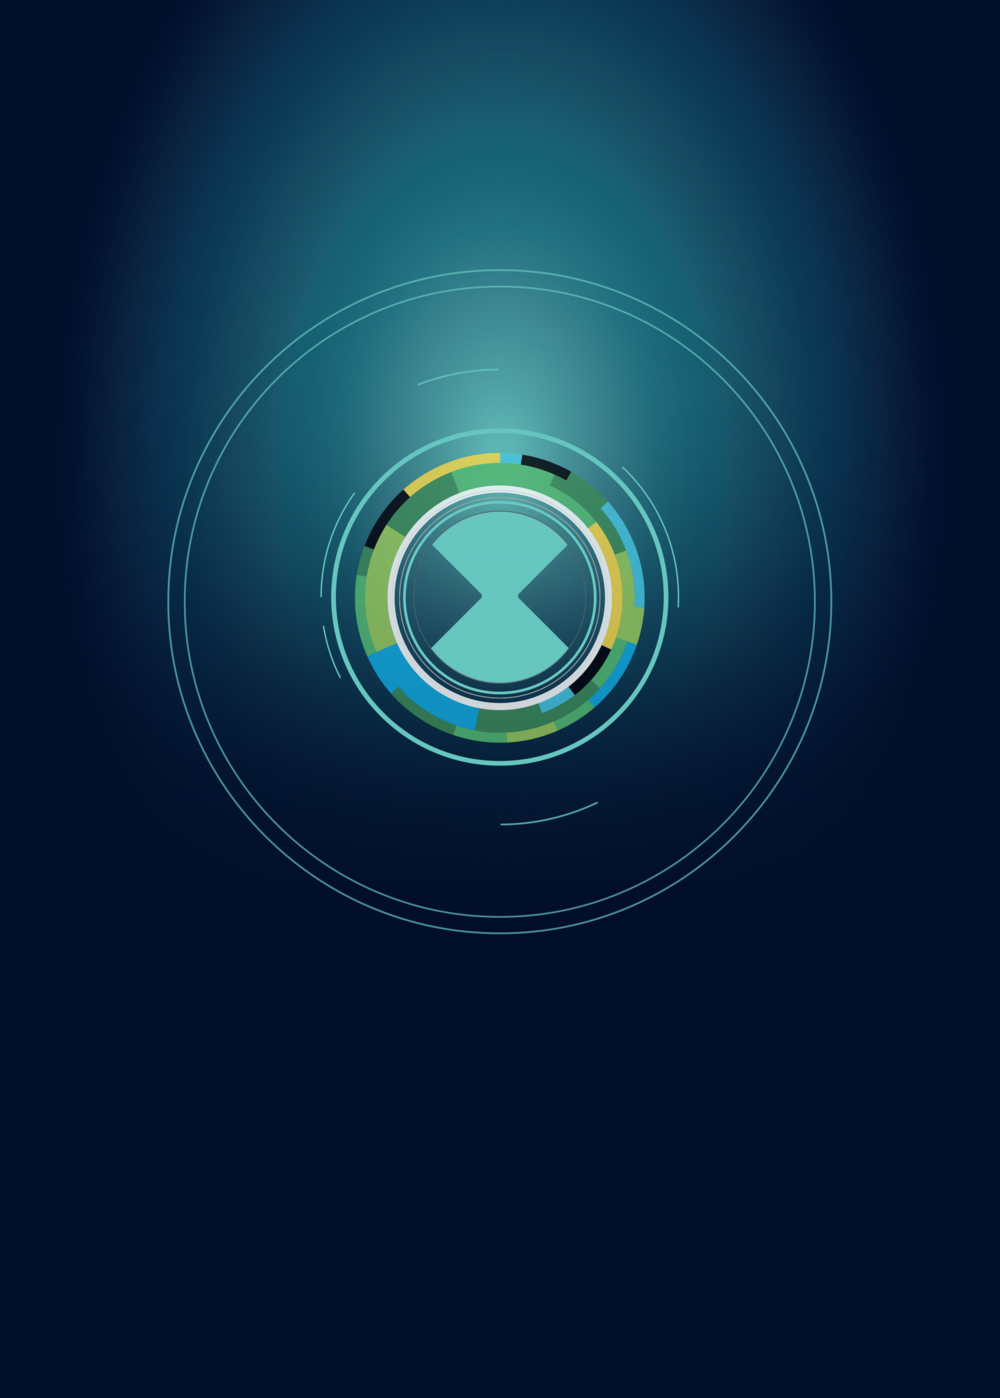 ben 10 omnitrix logo